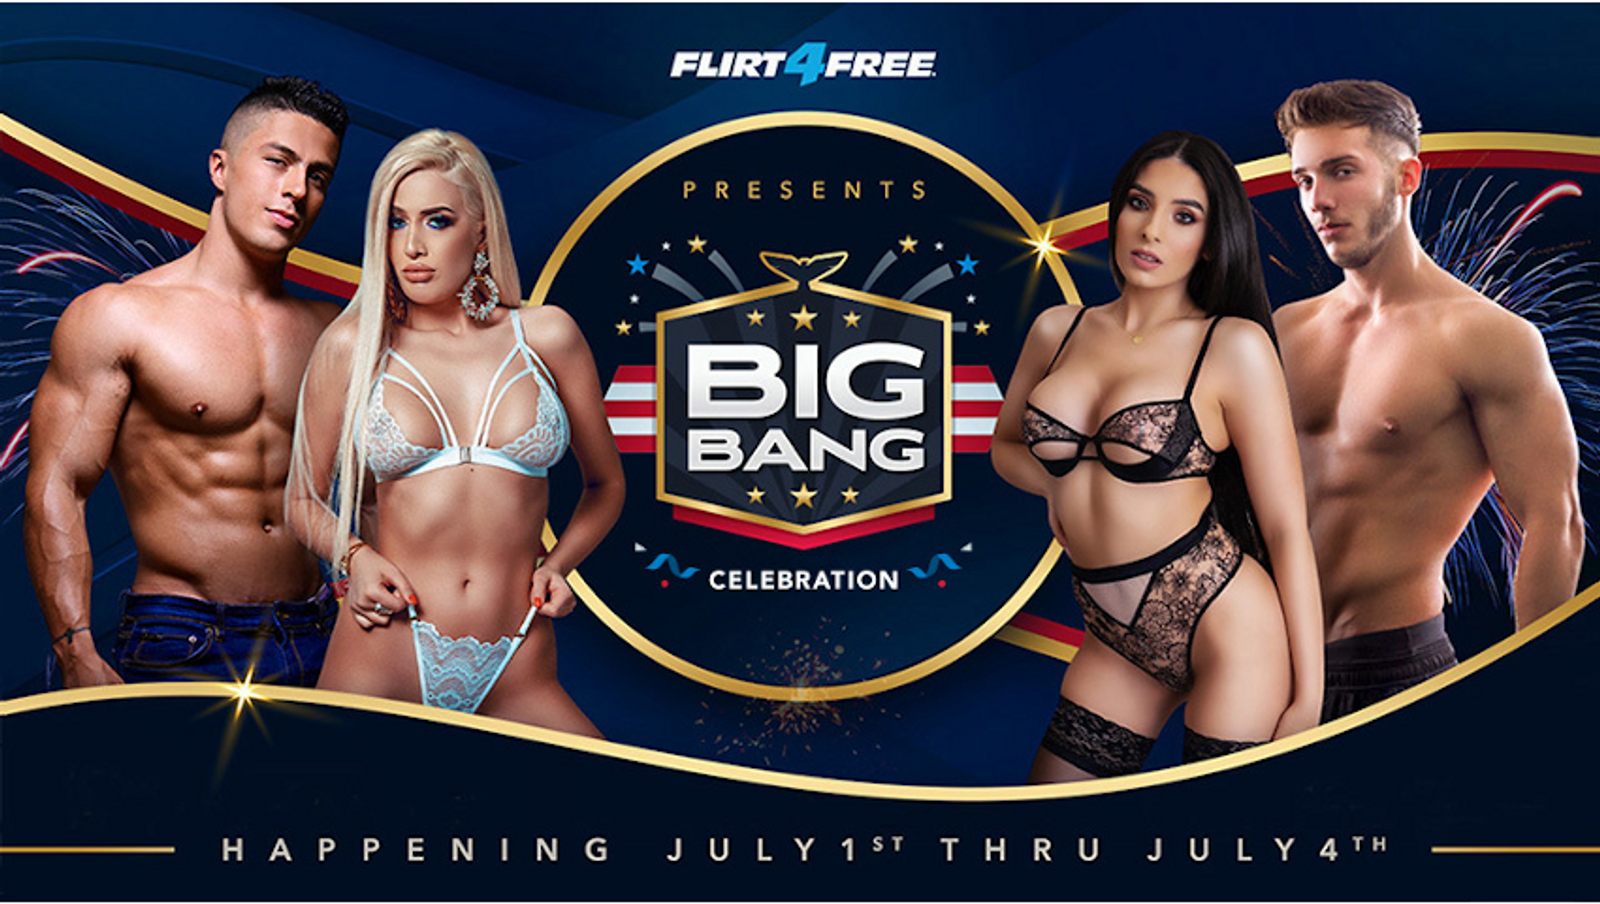 July to Start With a $20K 'Big Bang' on Flirt4Free